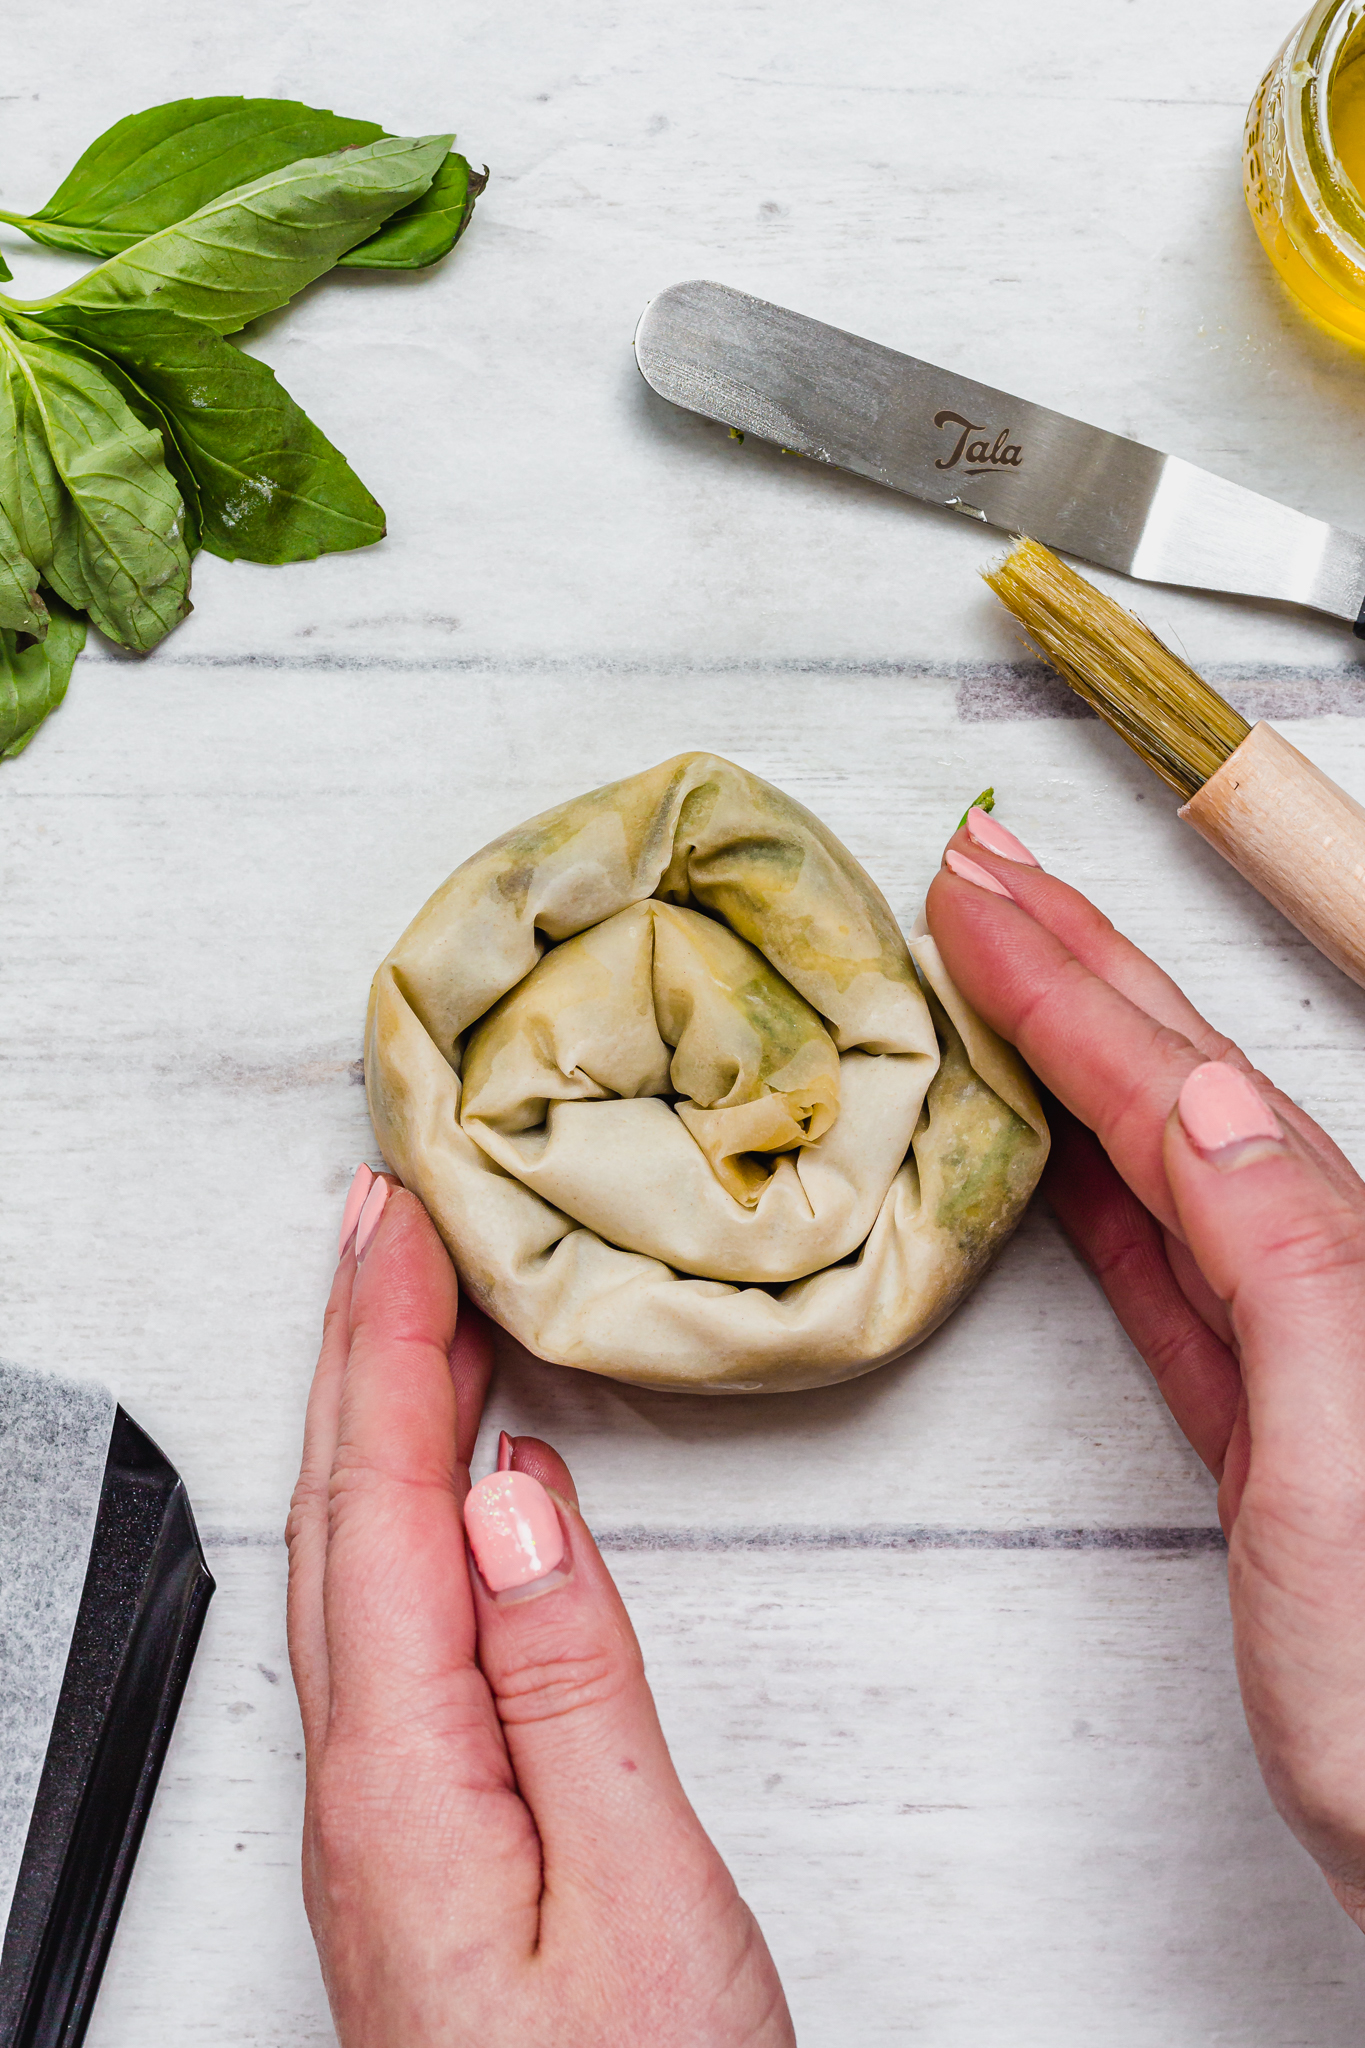 Rolling the Vegan Pesto Feta Filo Pastry Swirls